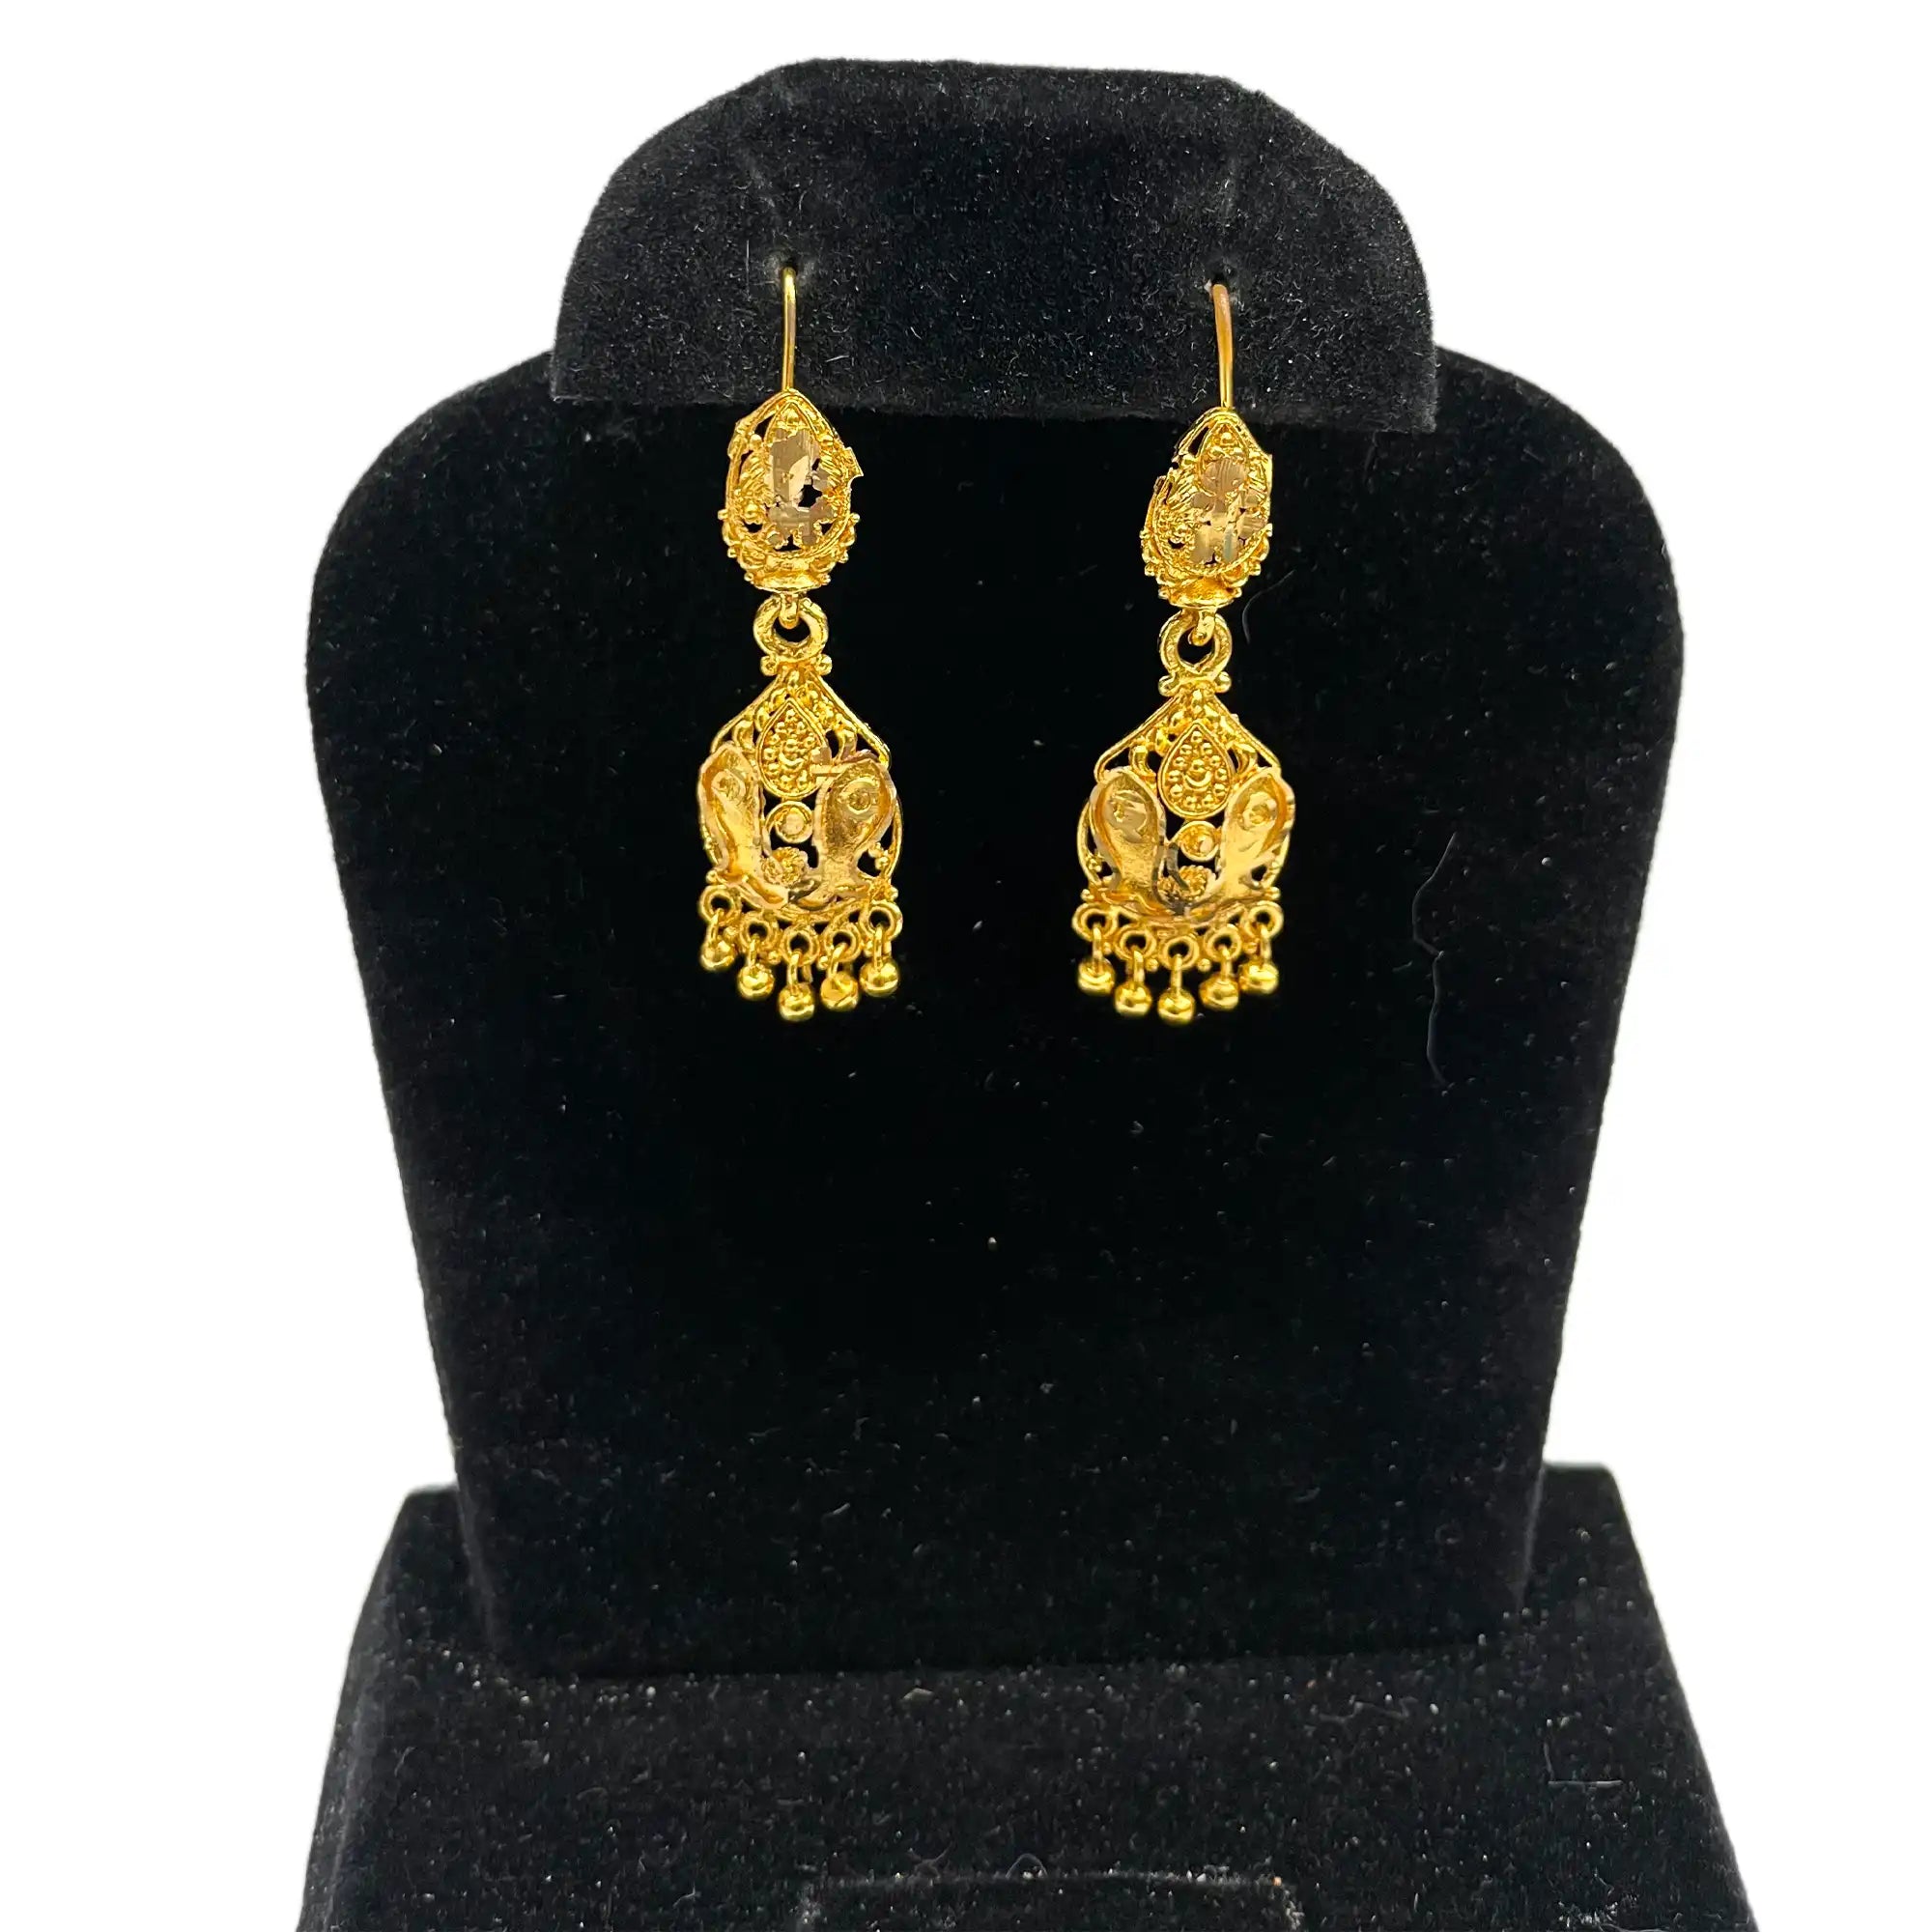 bollywood earrings, woemen's wedding earrings, south indian earrings